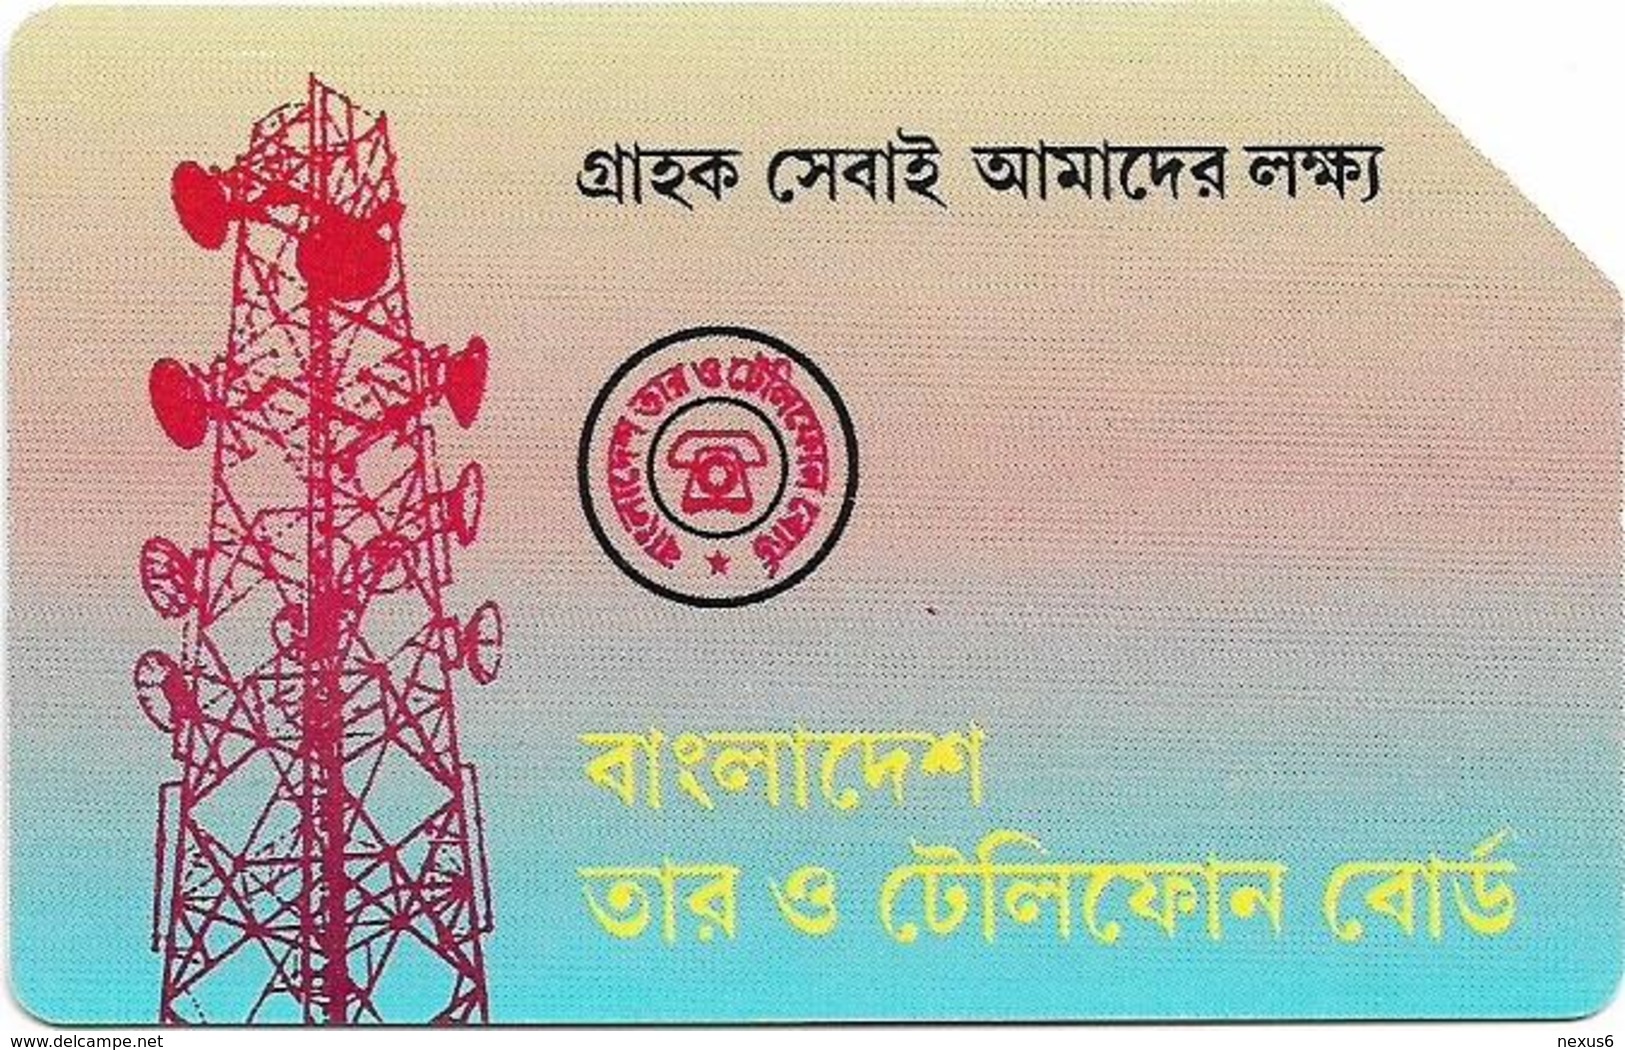 Bangladesh - Telephone Shilpa Sangstha (Urmet) - Radio Station (Big Magnetic Band), 1996, 100Units, Used - Bangladesh